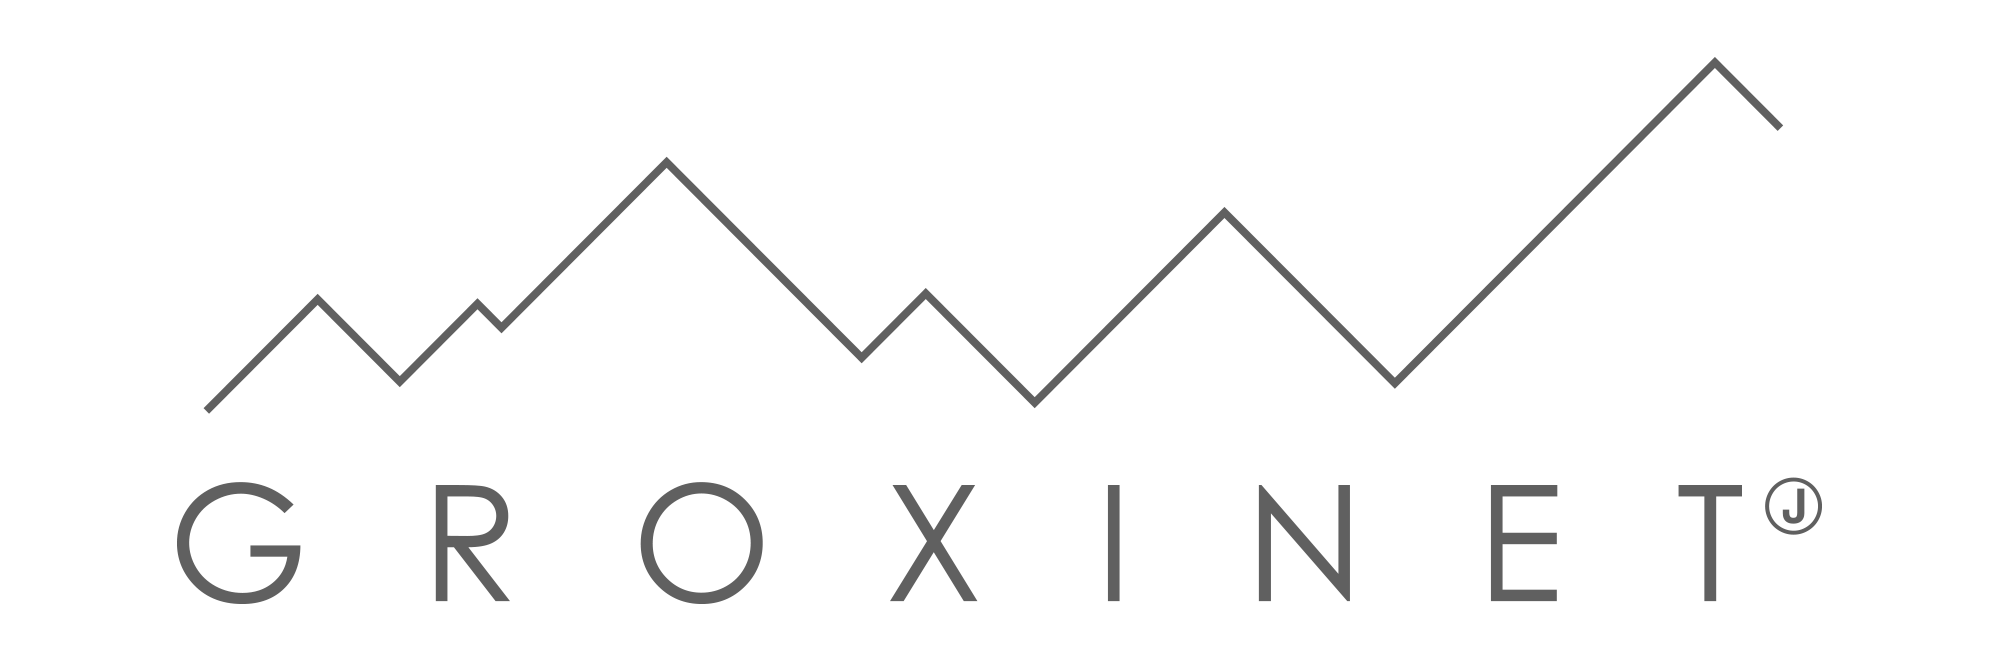 Groxinet Logo